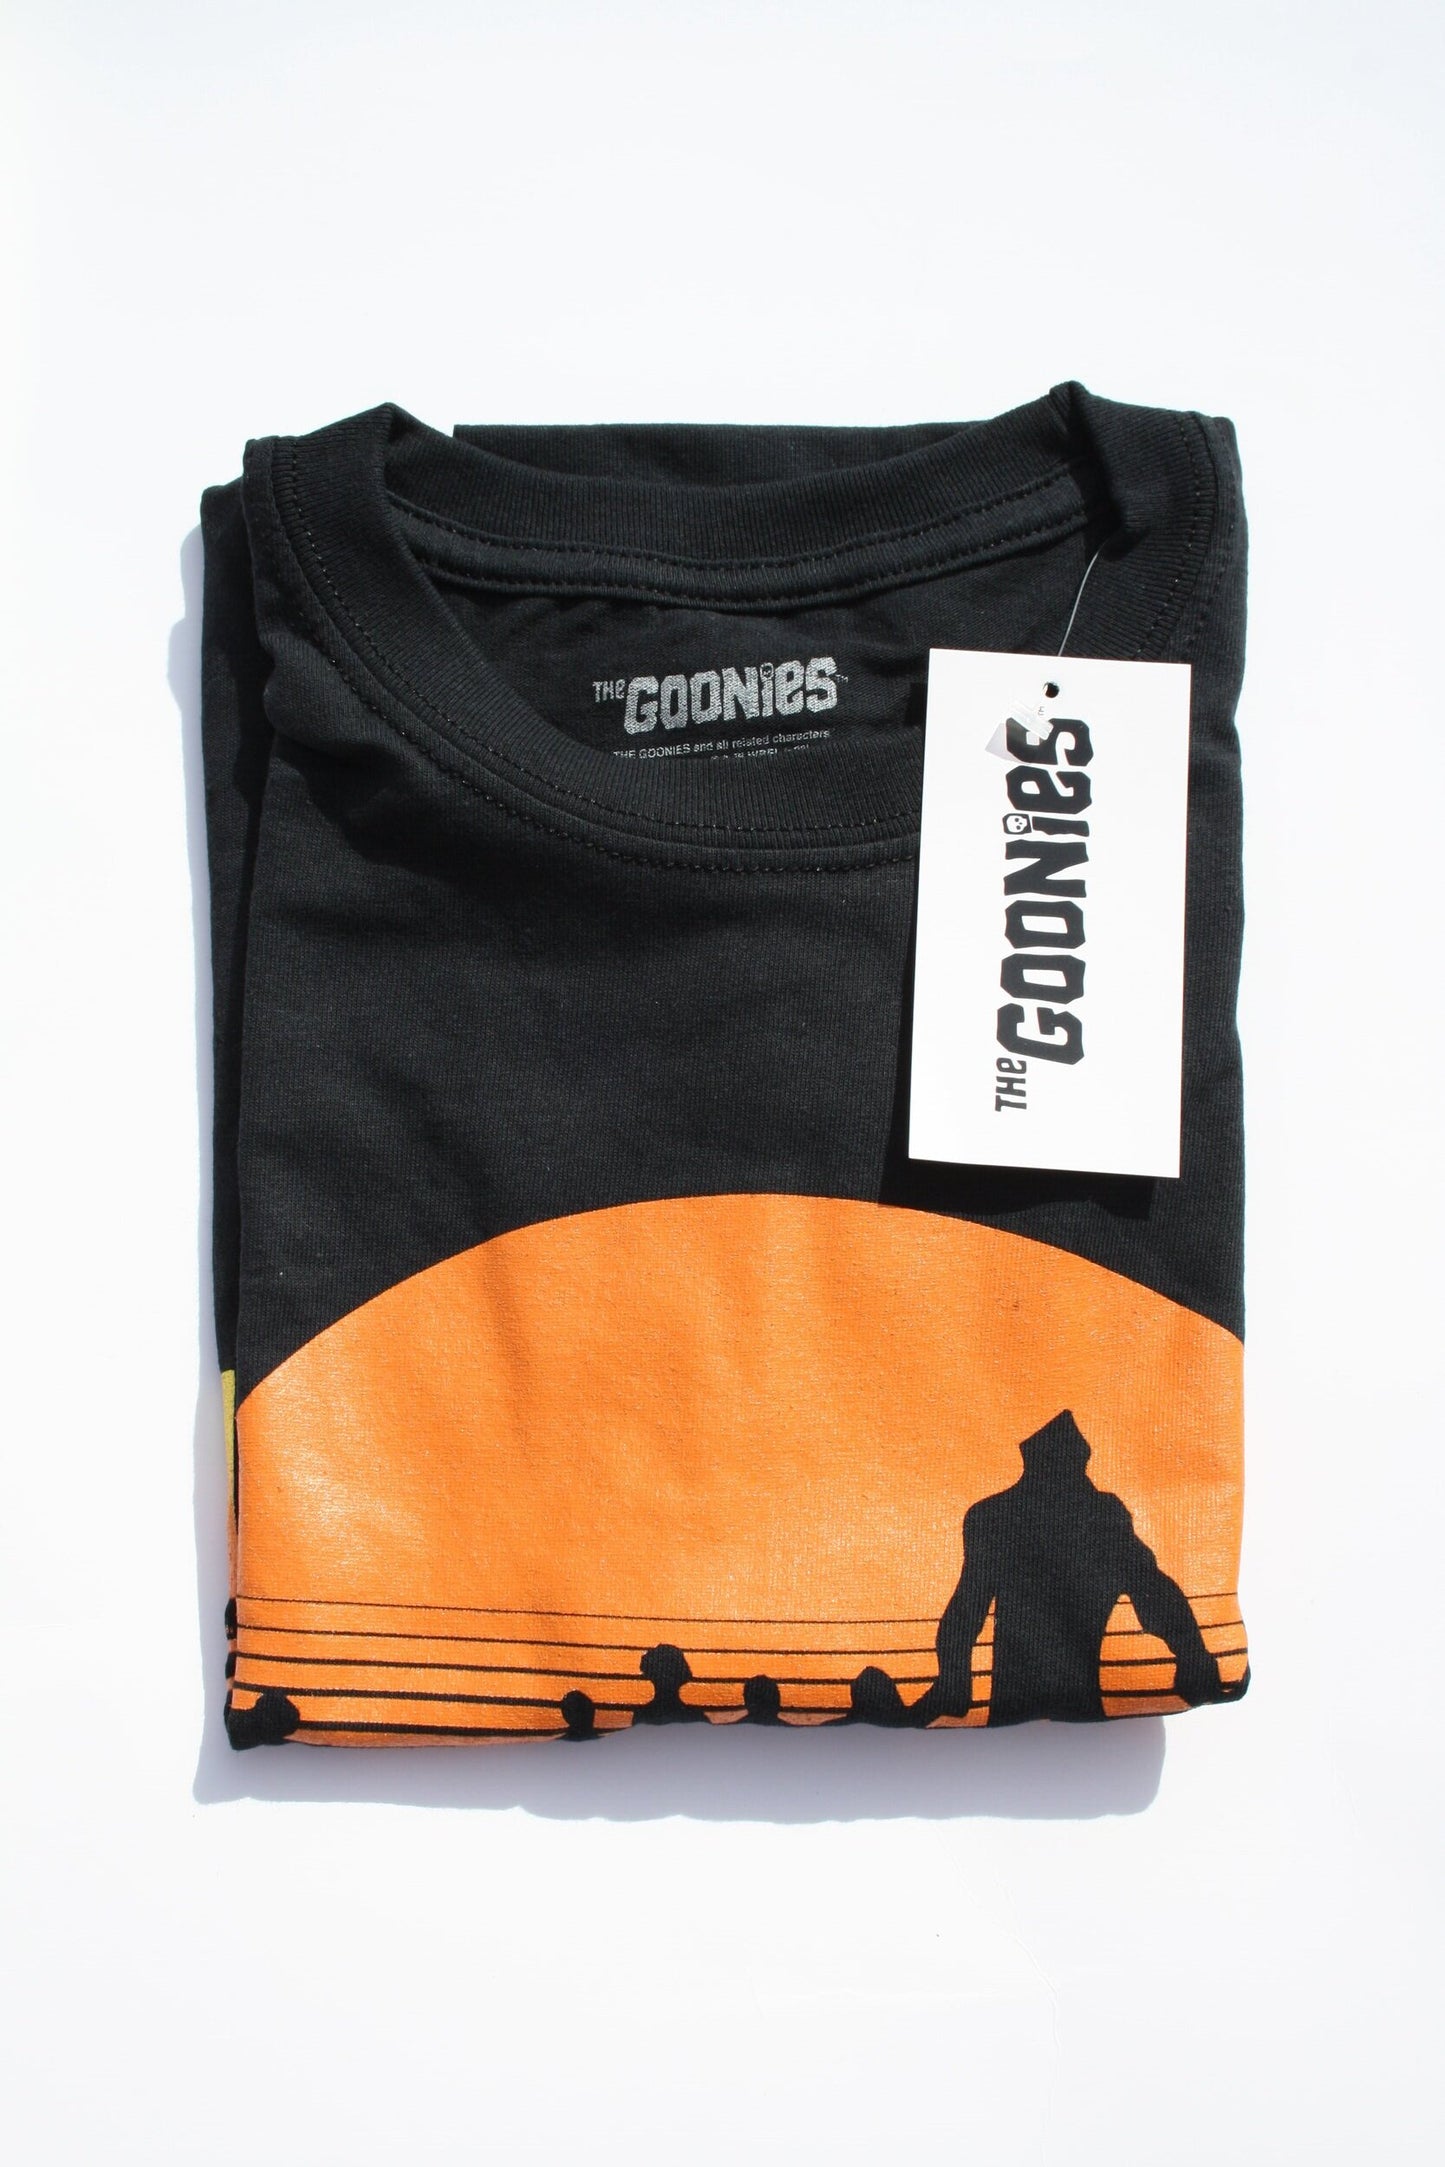 The Goonies - Sunset Group Unisex T-Shirt